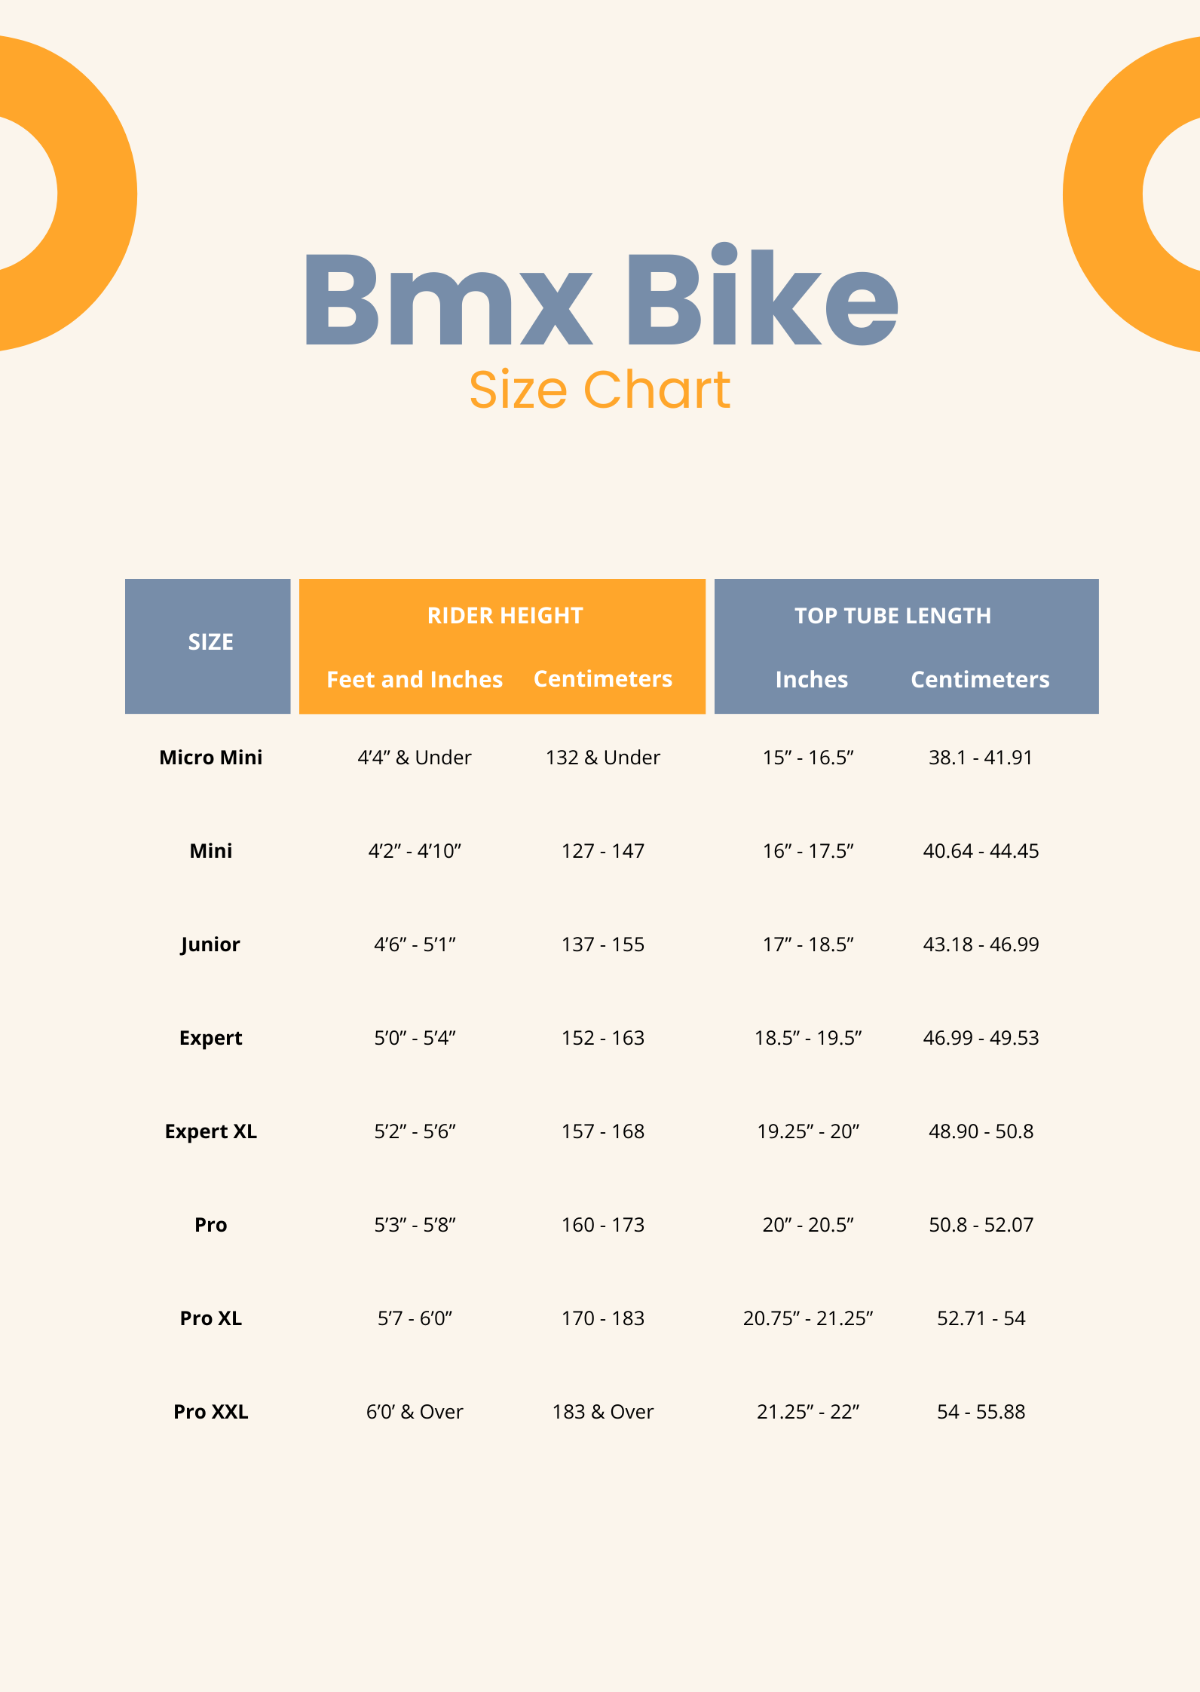 BMX Bike Size Chart Template